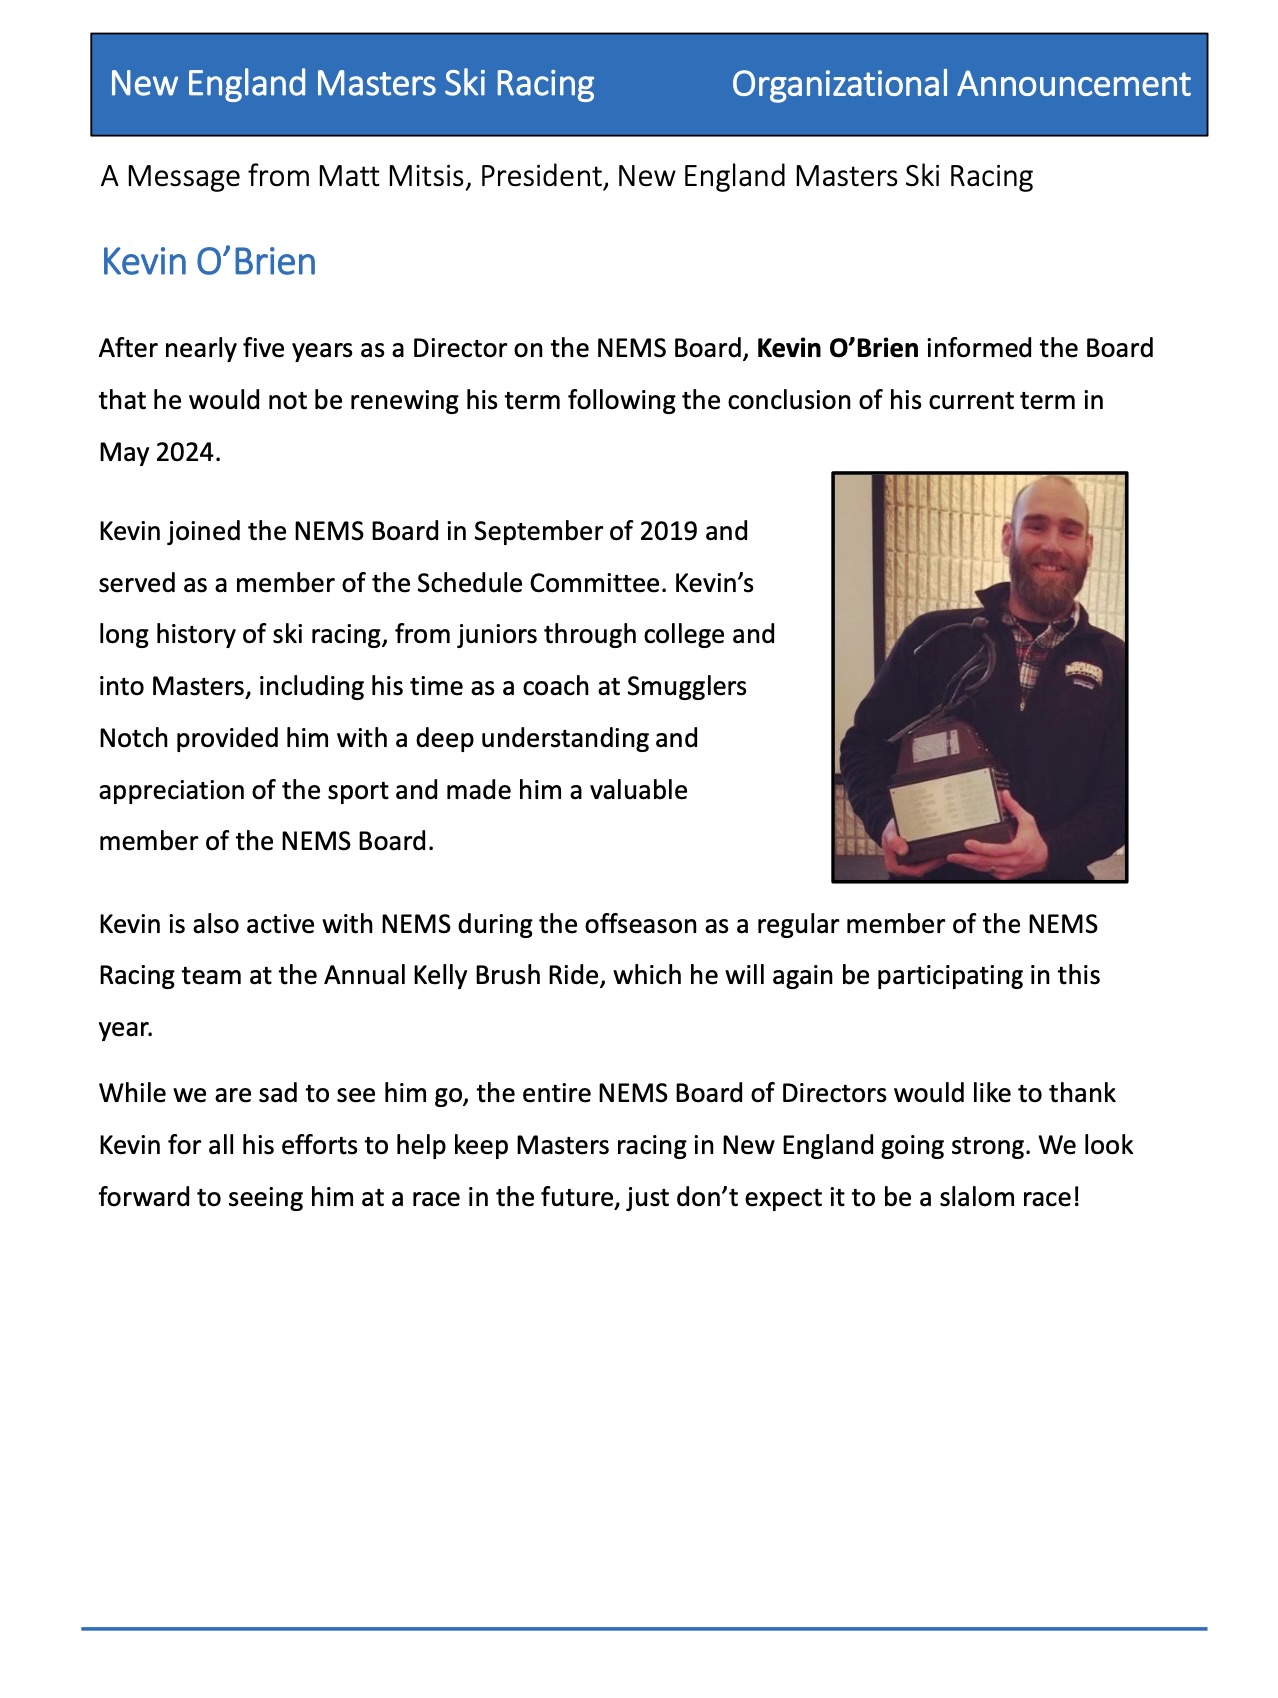 NEMS Org Announcement -  Kevin O'Brien